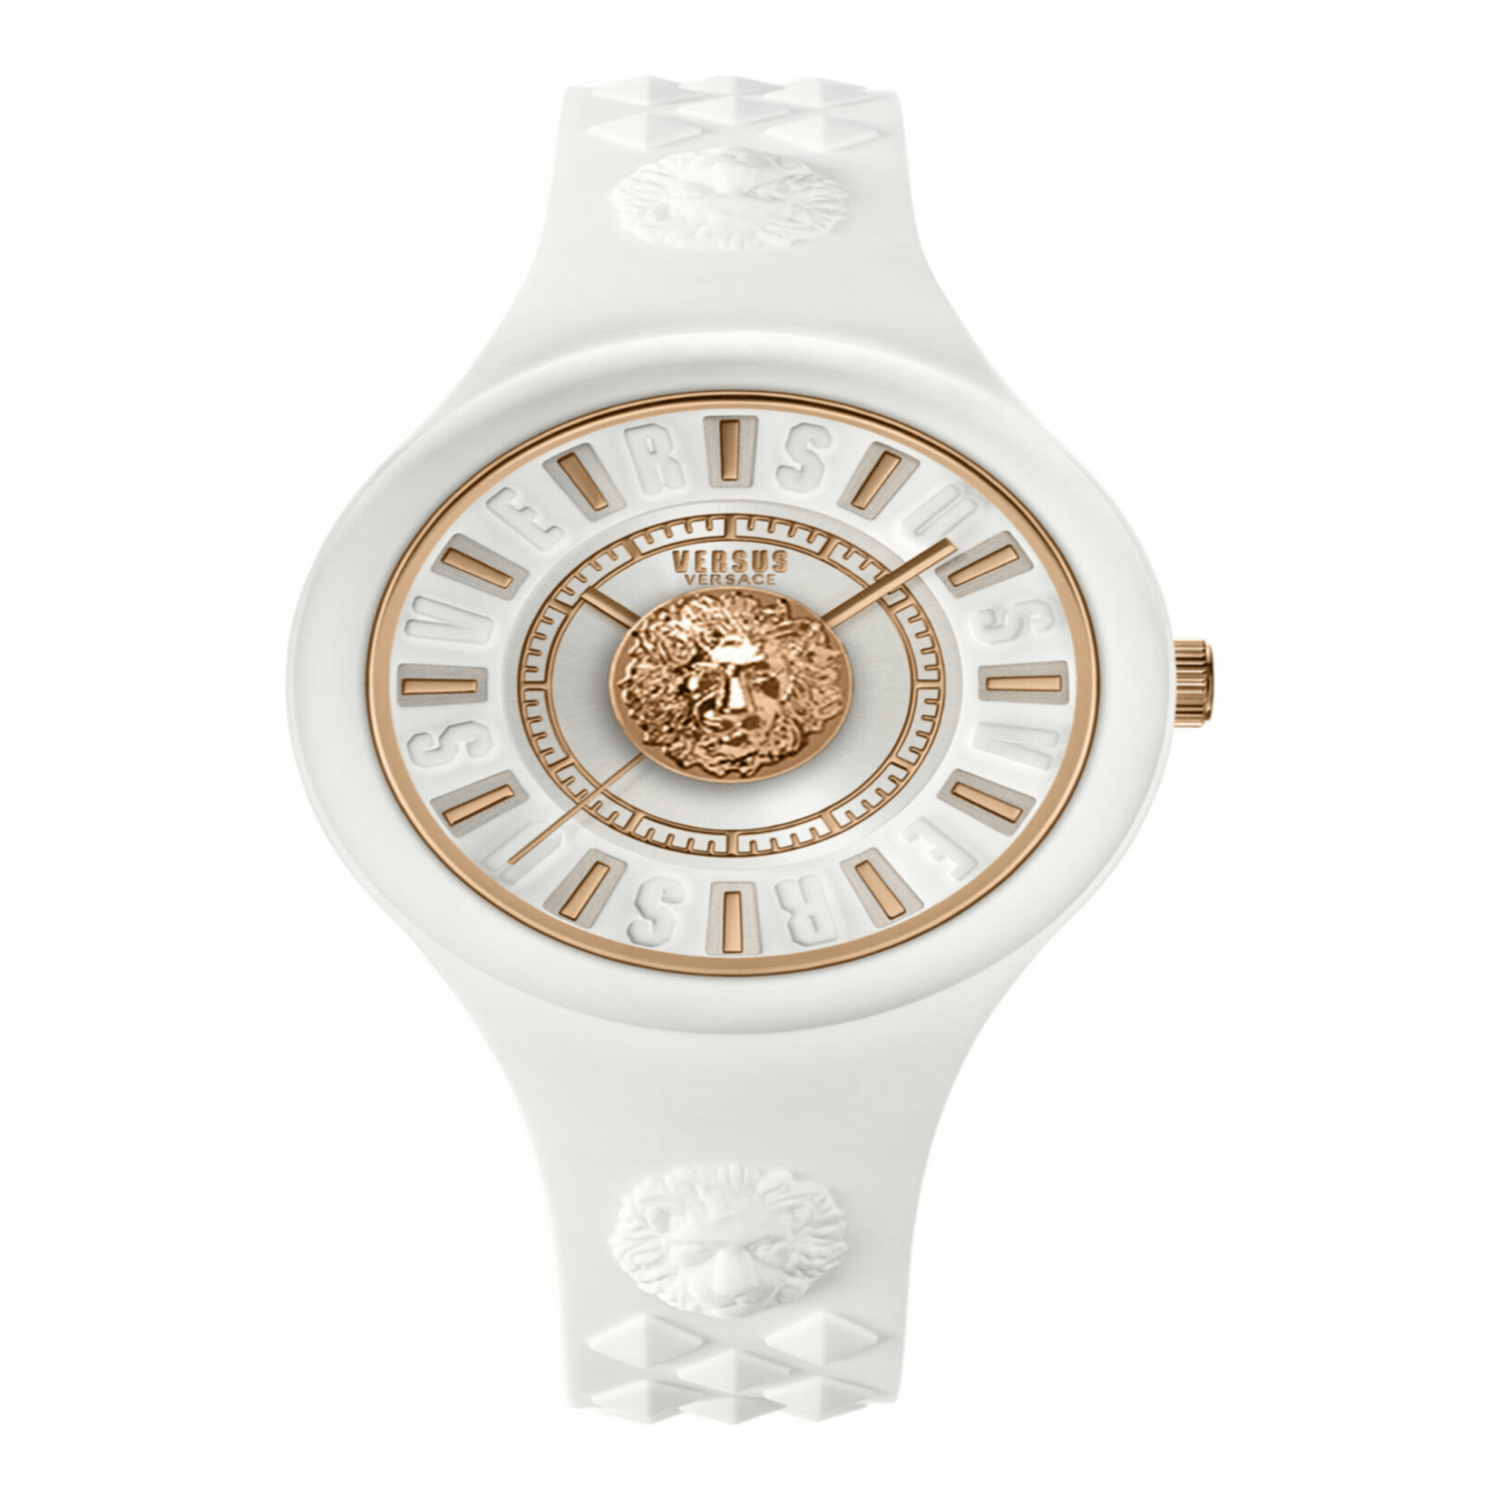 Reloj Versus Versace Fire Island Lion Watch VSPOQ2H21 para Mujer en Blanco